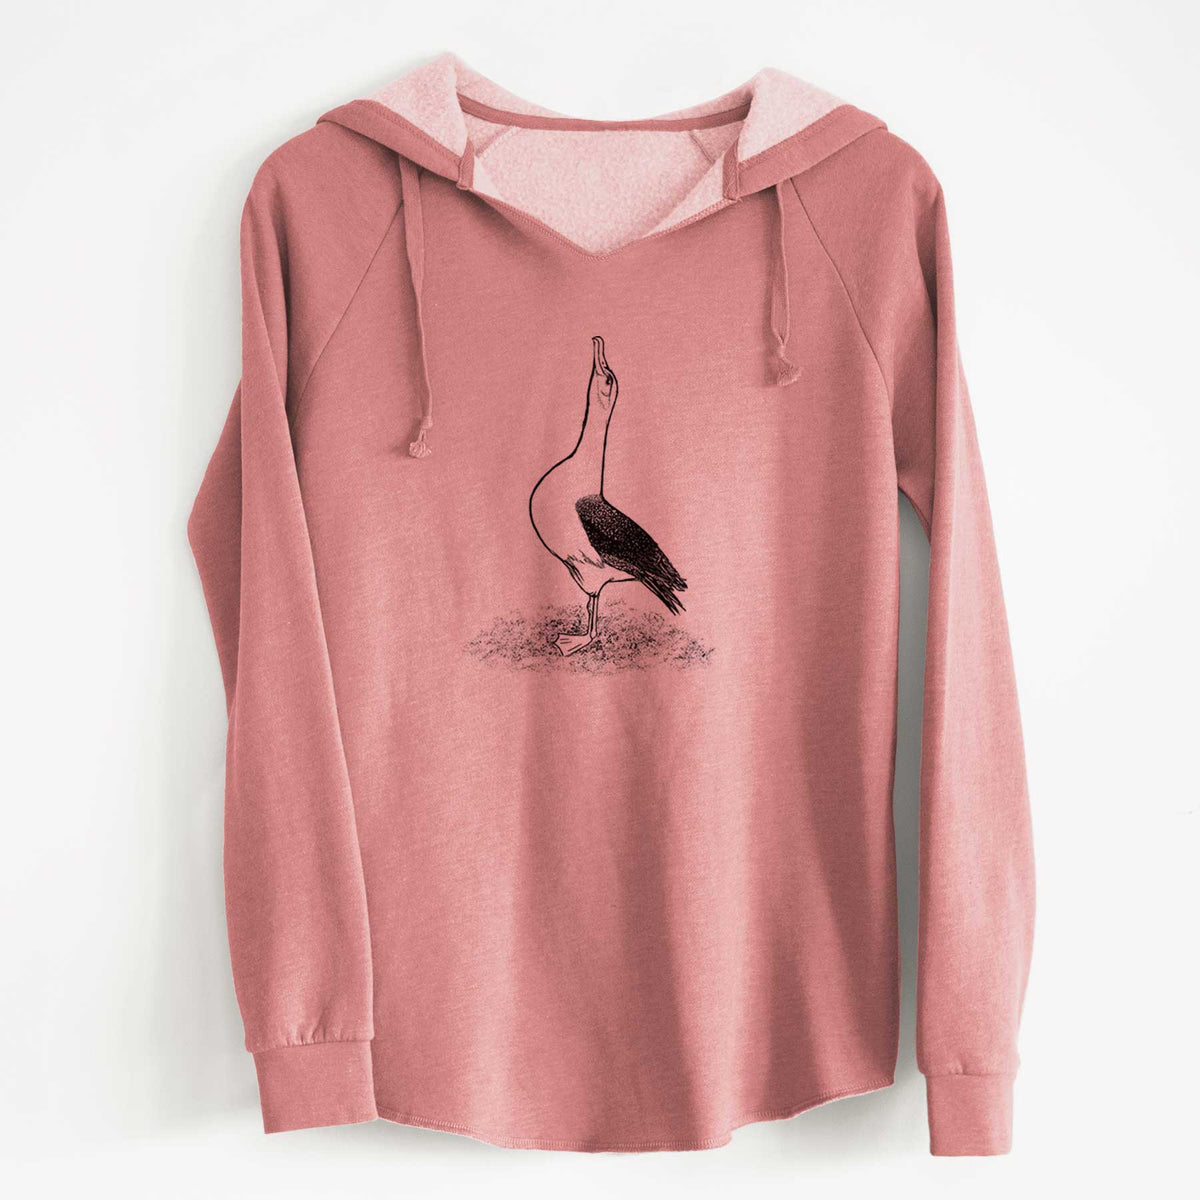 Diomedea exulans - Wandering Albatross - Cali Wave Hooded Sweatshirt